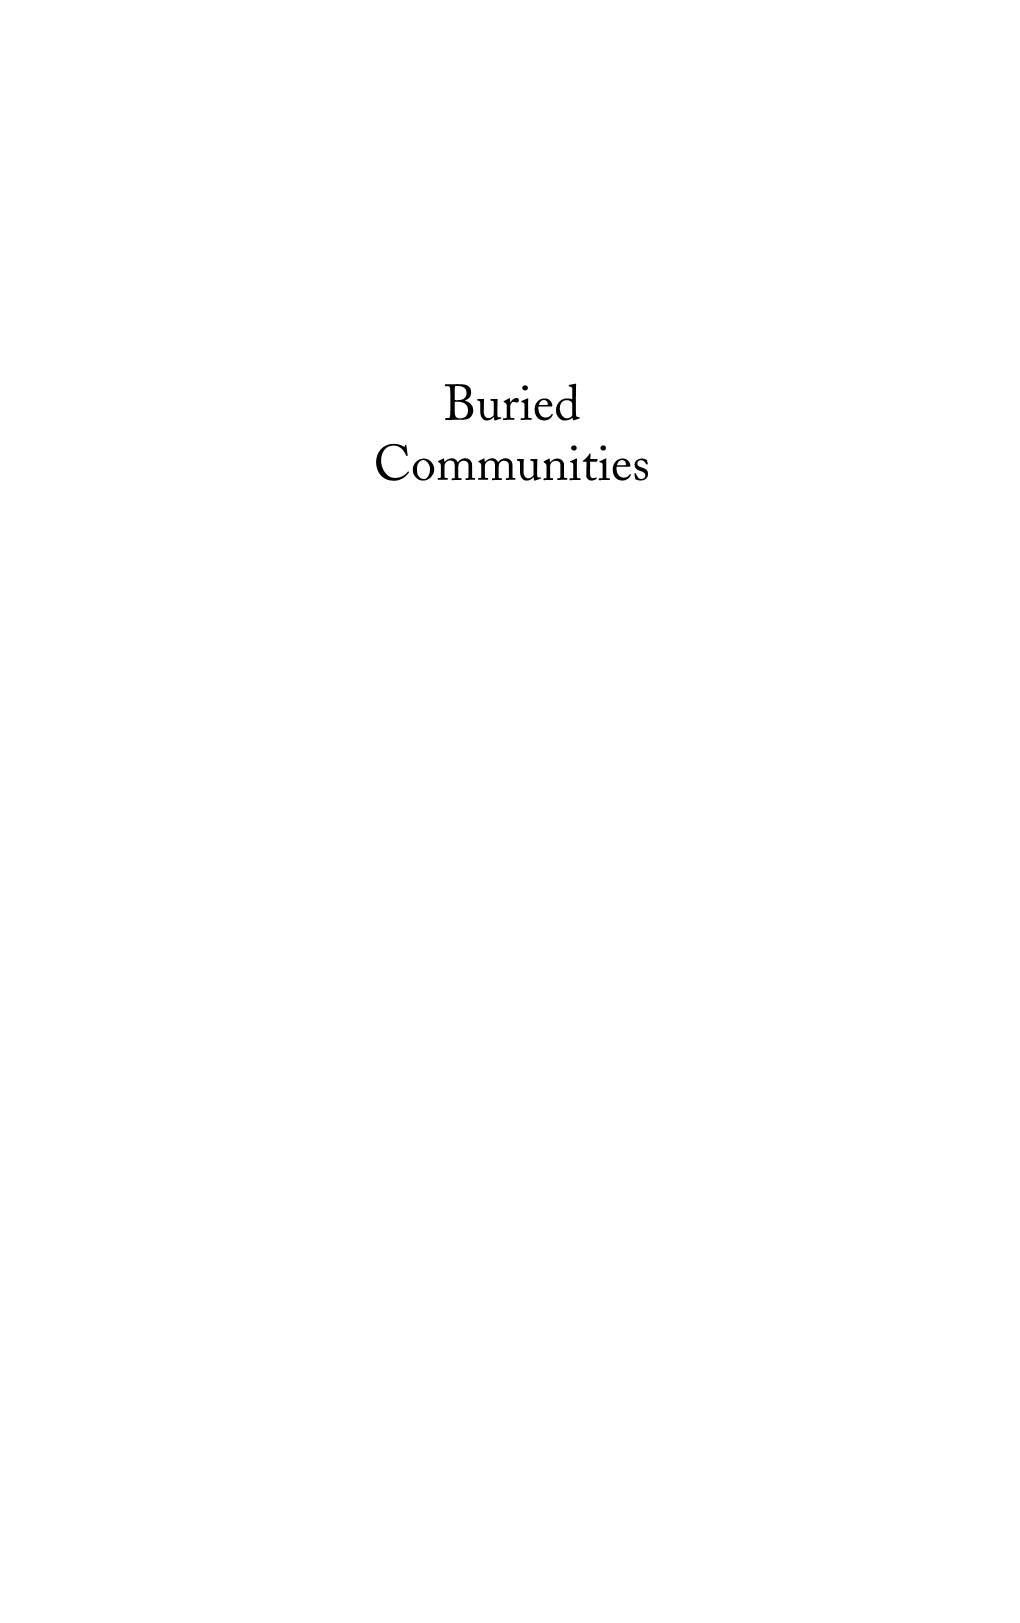 Buried Communities